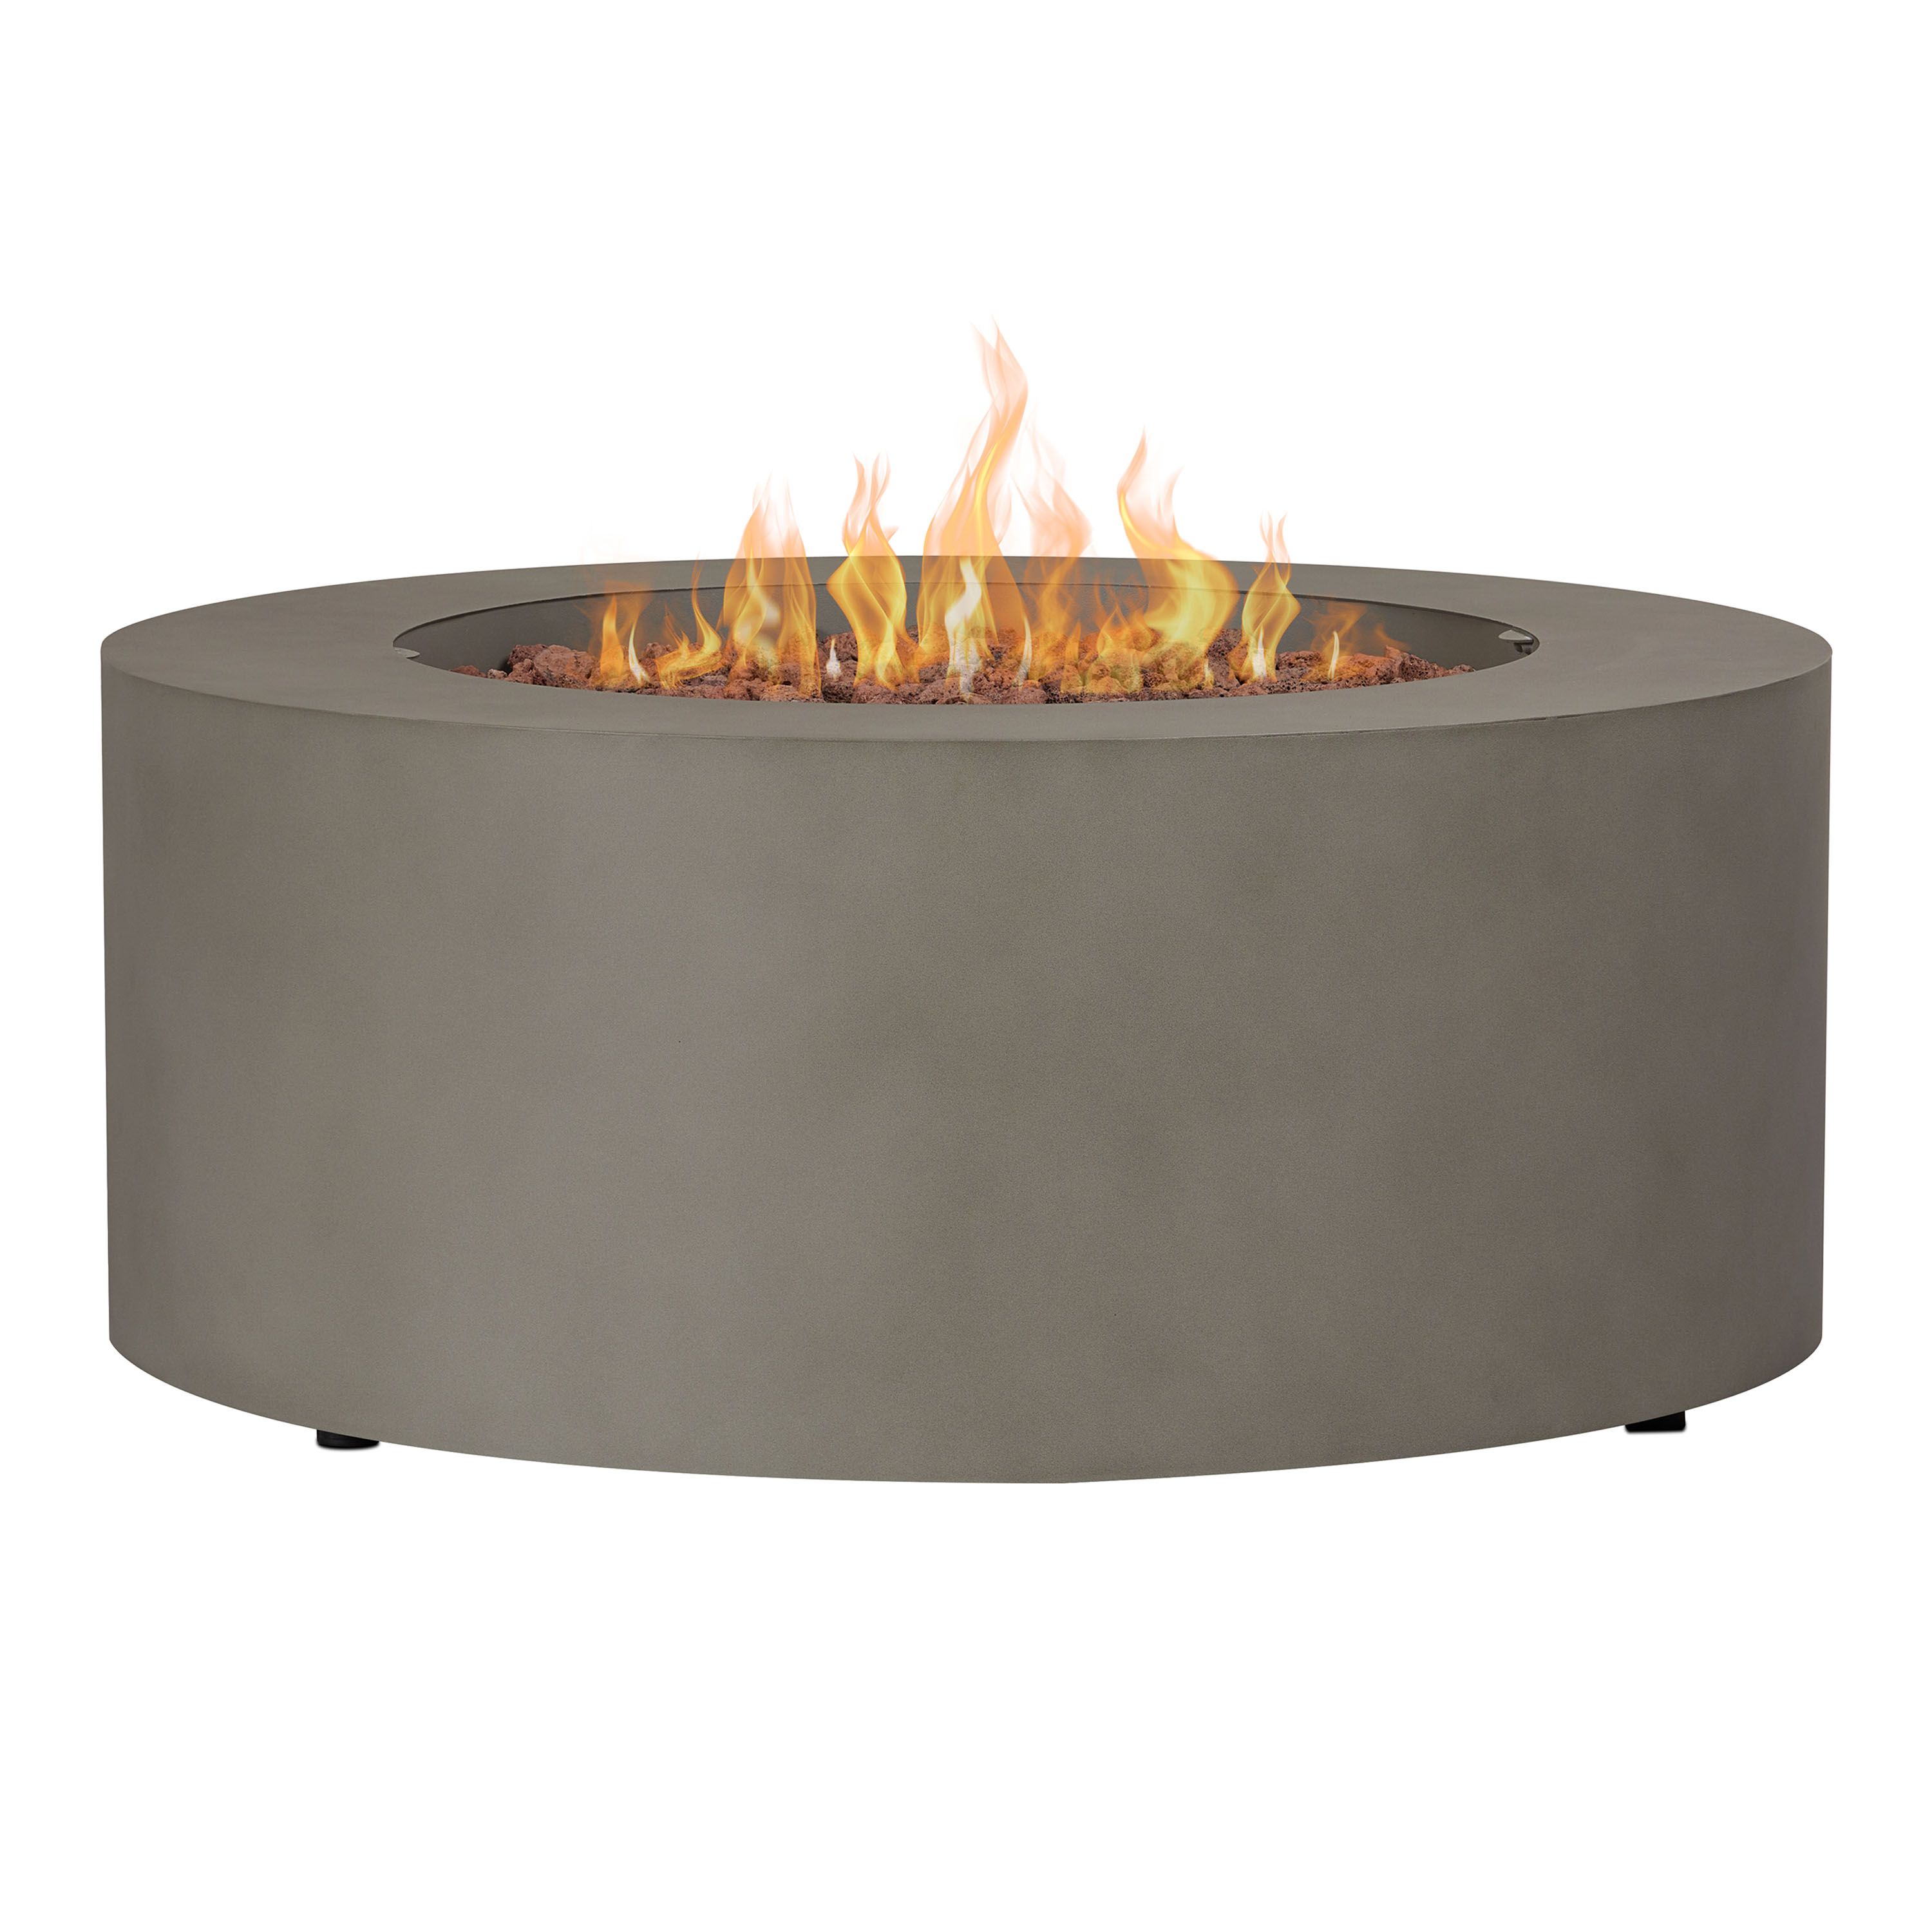 Varadero Round Steel Gas Fire Pit Table | World Market